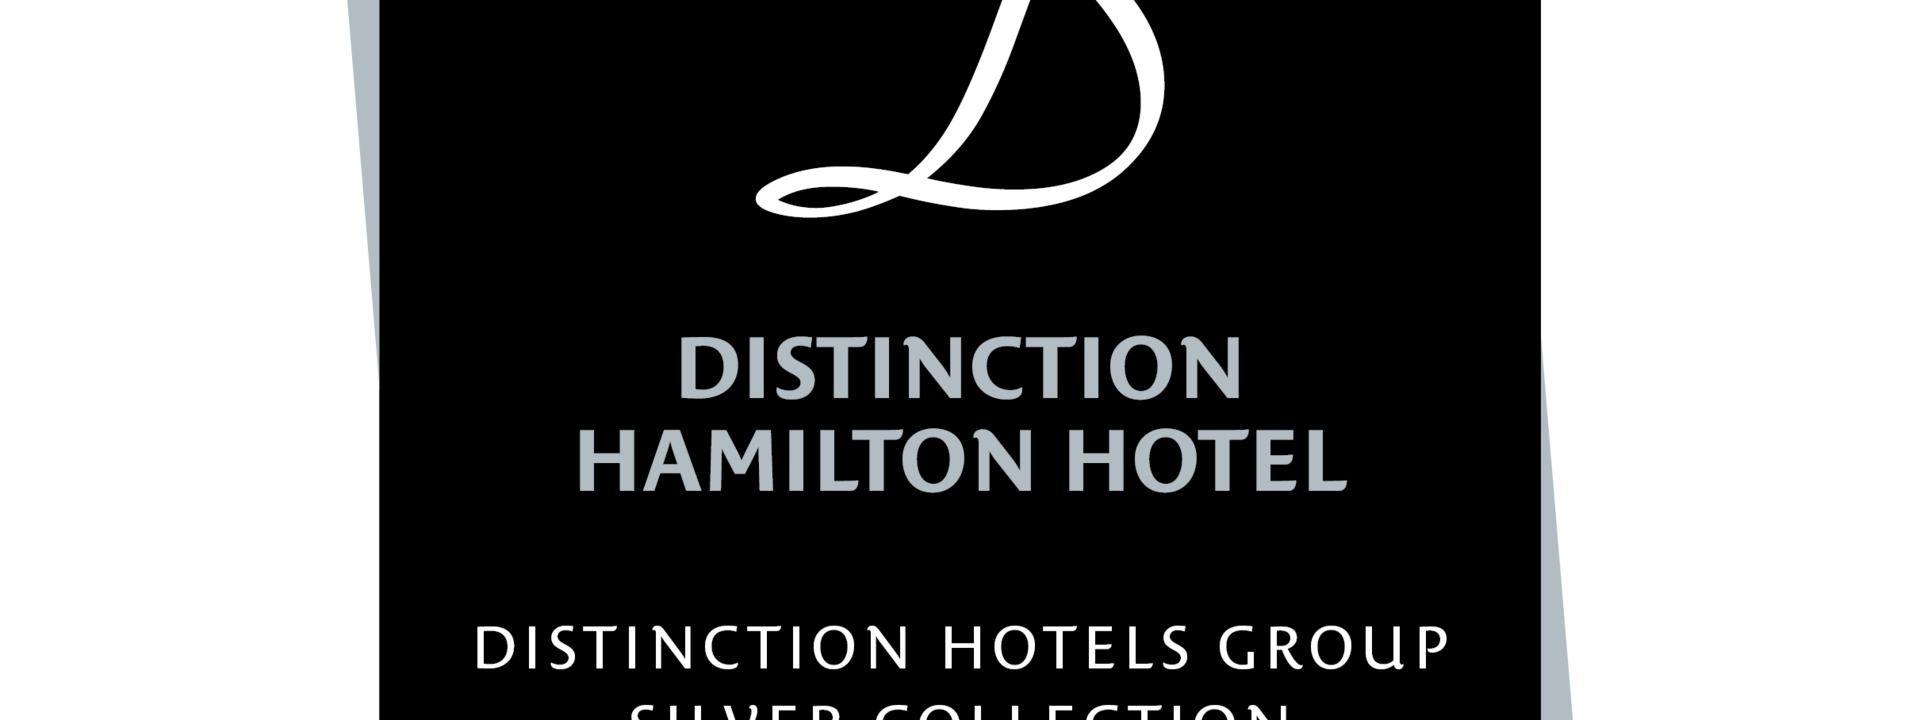 Distinction Hamilton Hotel  Logo4 PNG.png